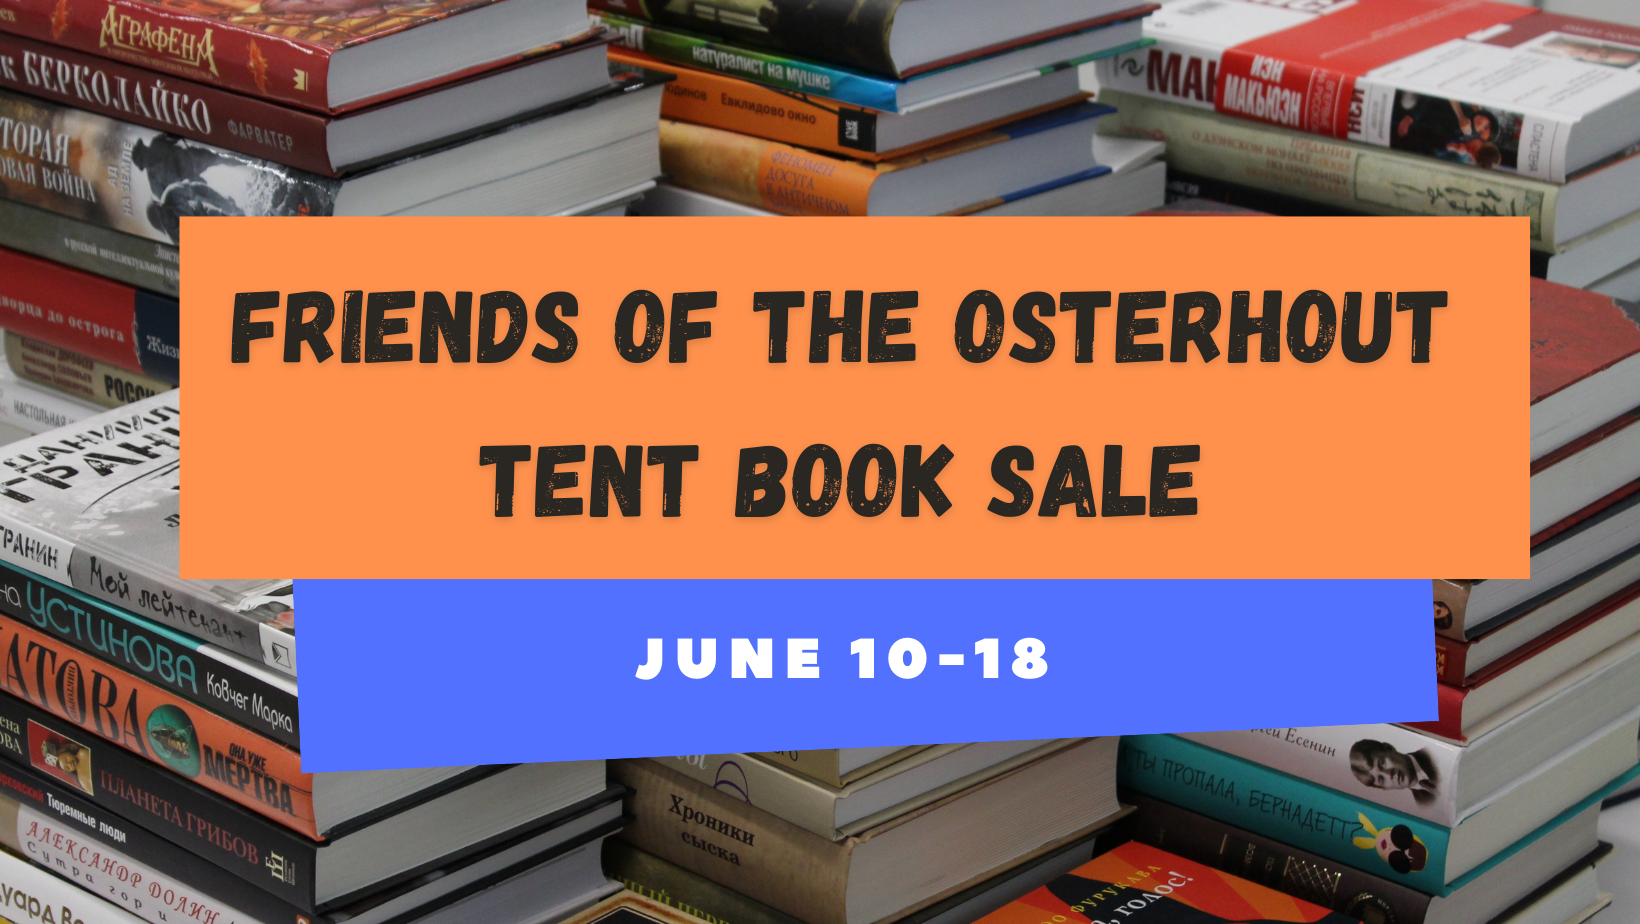 Friends Tent Book Sale is OPEN! Osterhout Free Library